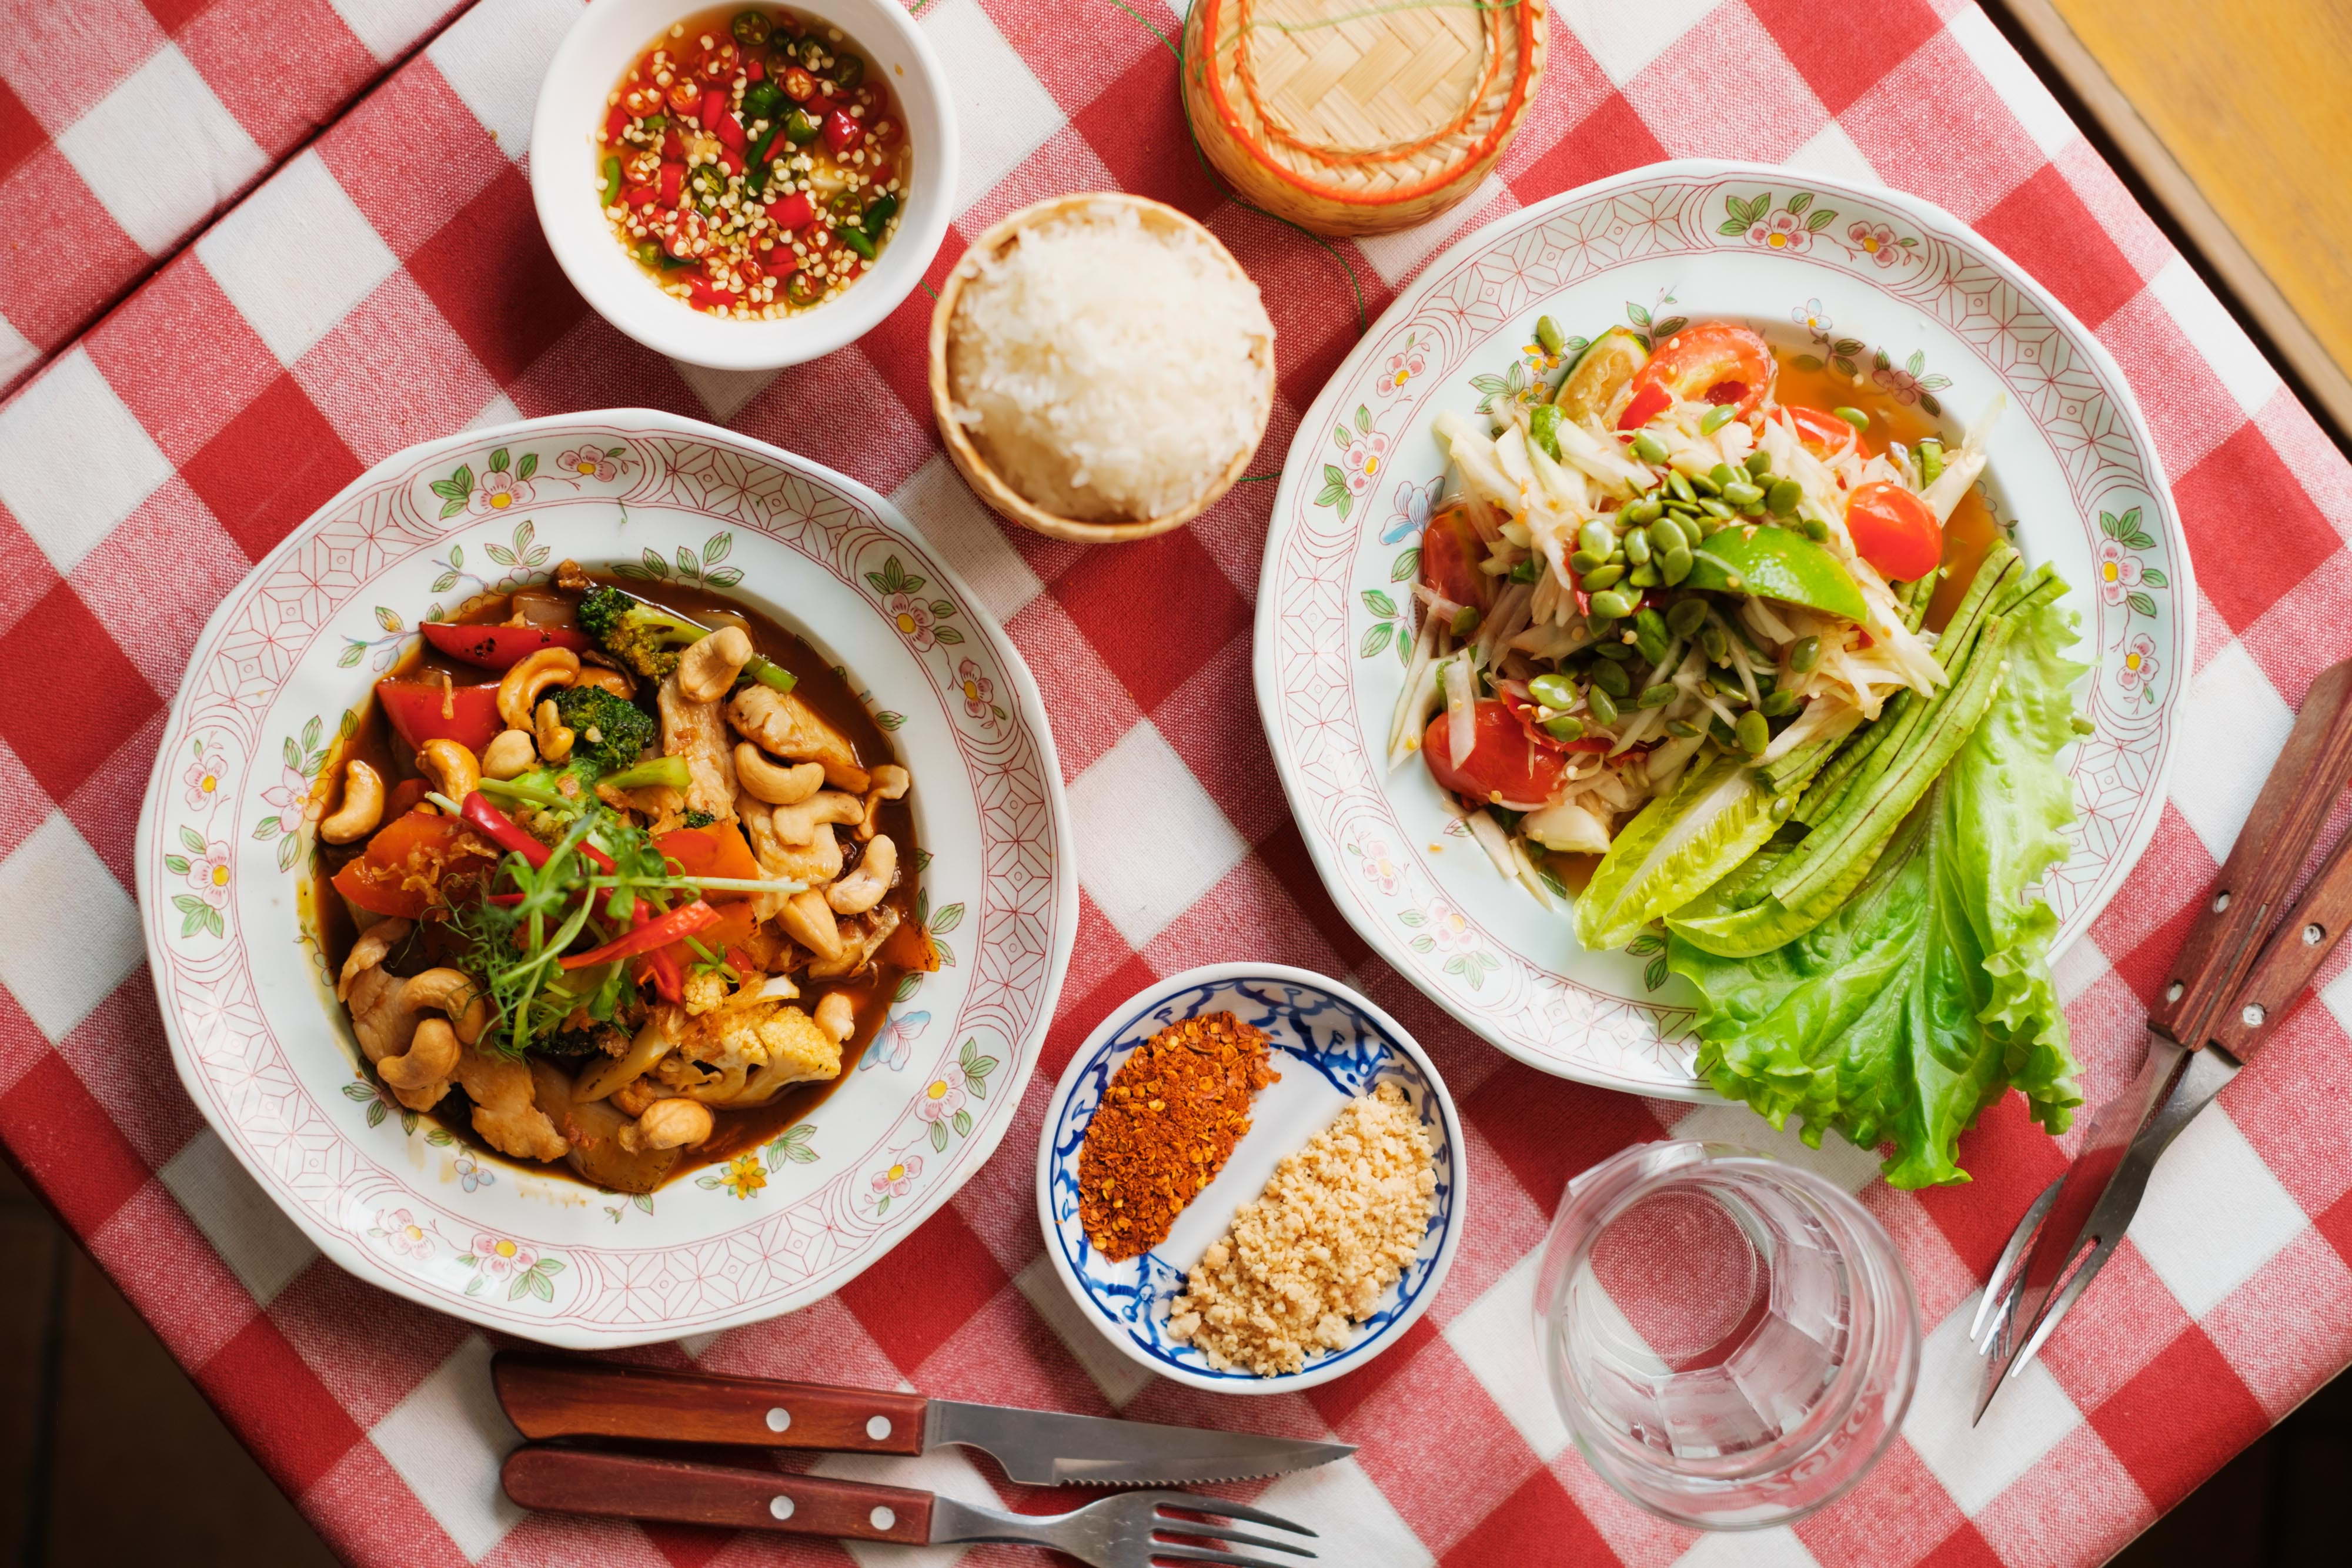 Elephant Thai – Lunch i city och Norrmalm